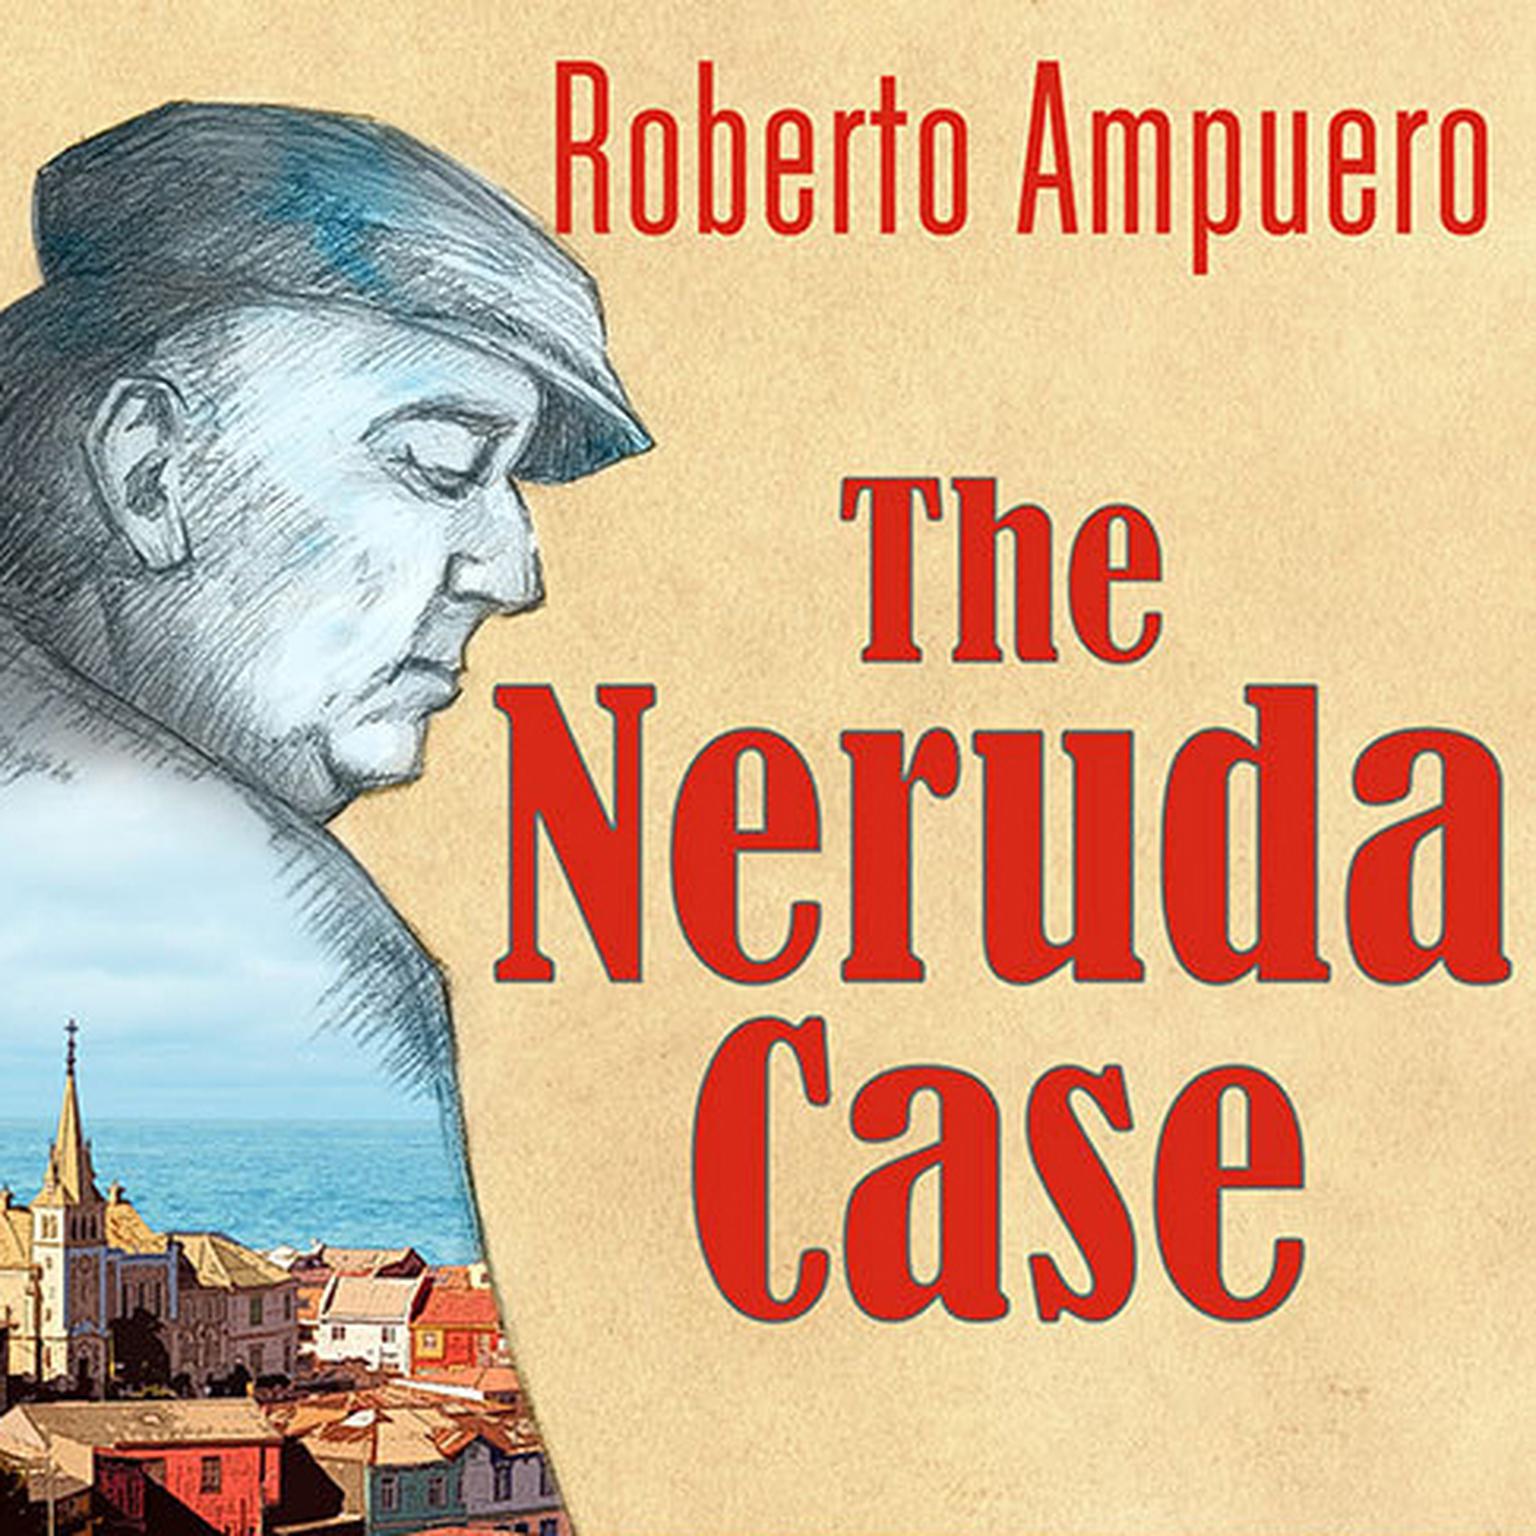 The Neruda Case: A Novel Audiobook, by Roberto Ampuero